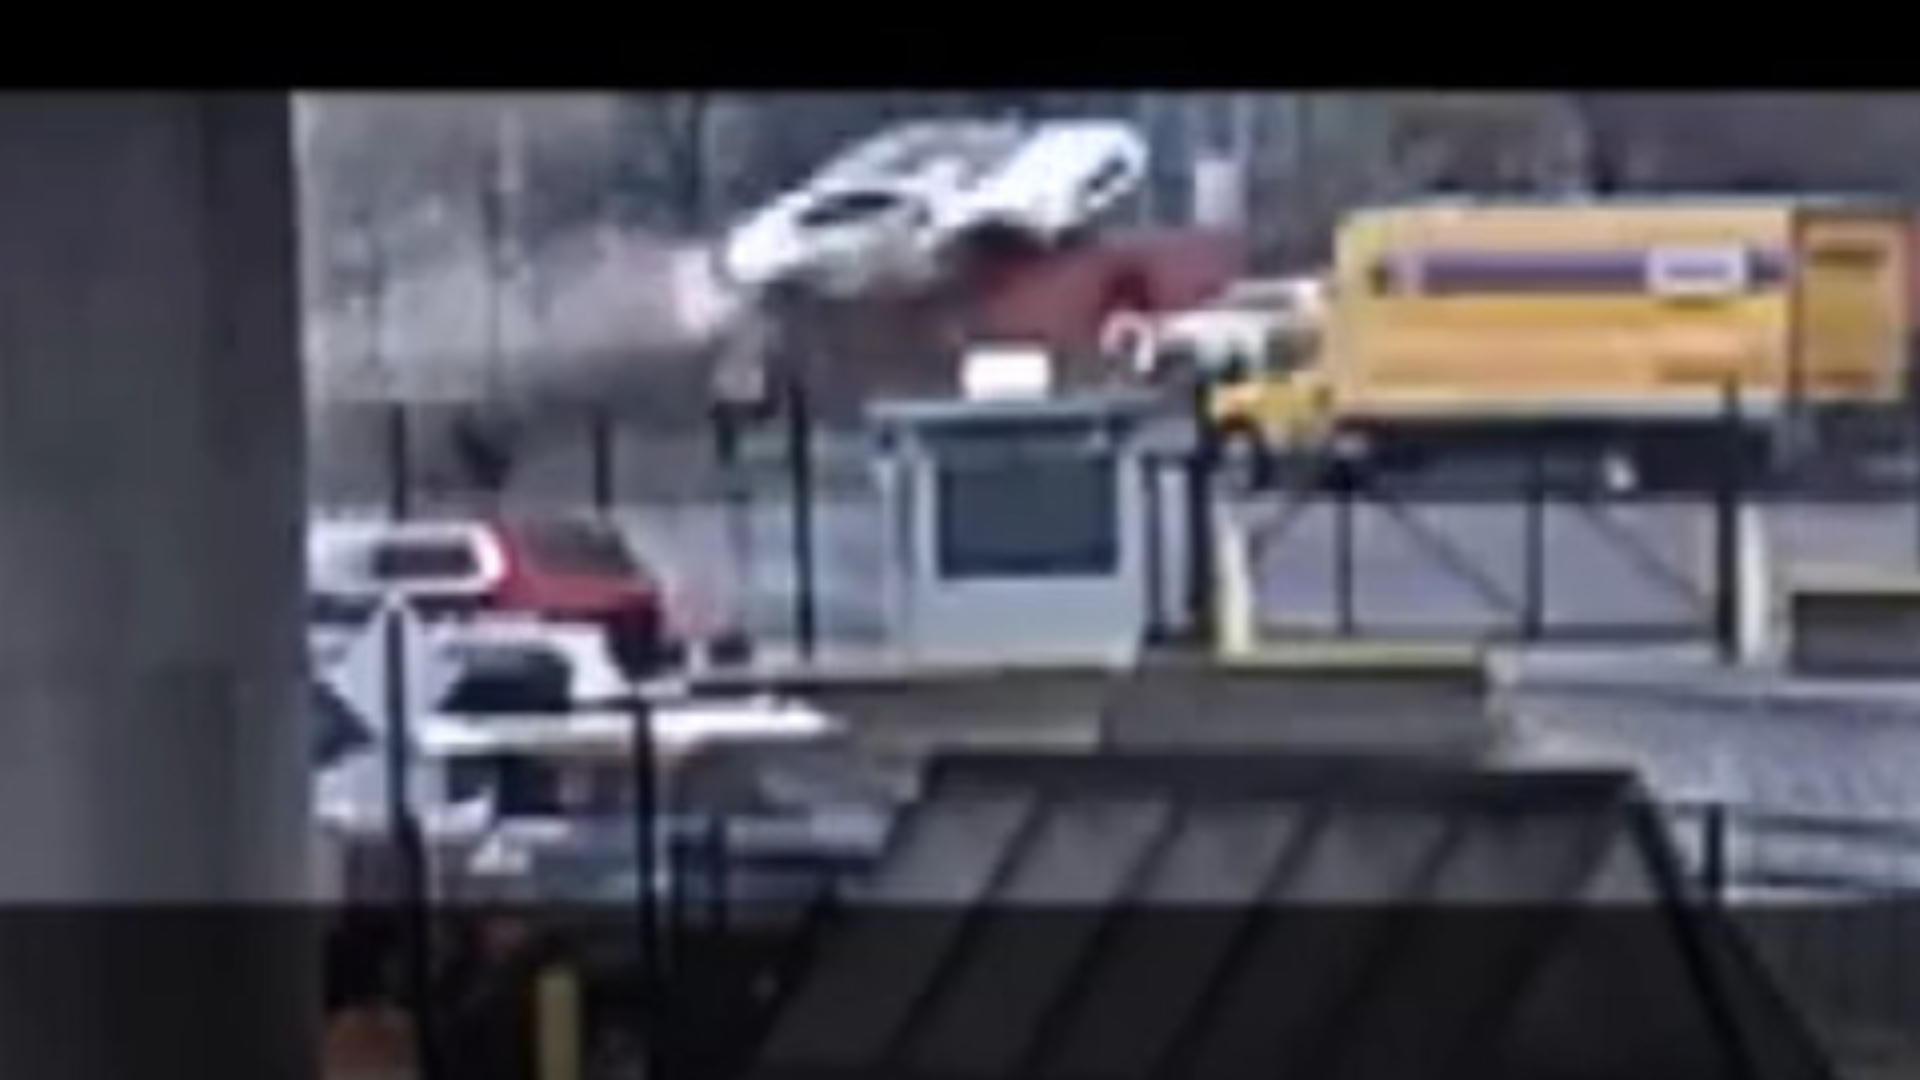 Witnesses describe ‘terrifying’ scene at fatal Rainbow Bridge car explosion